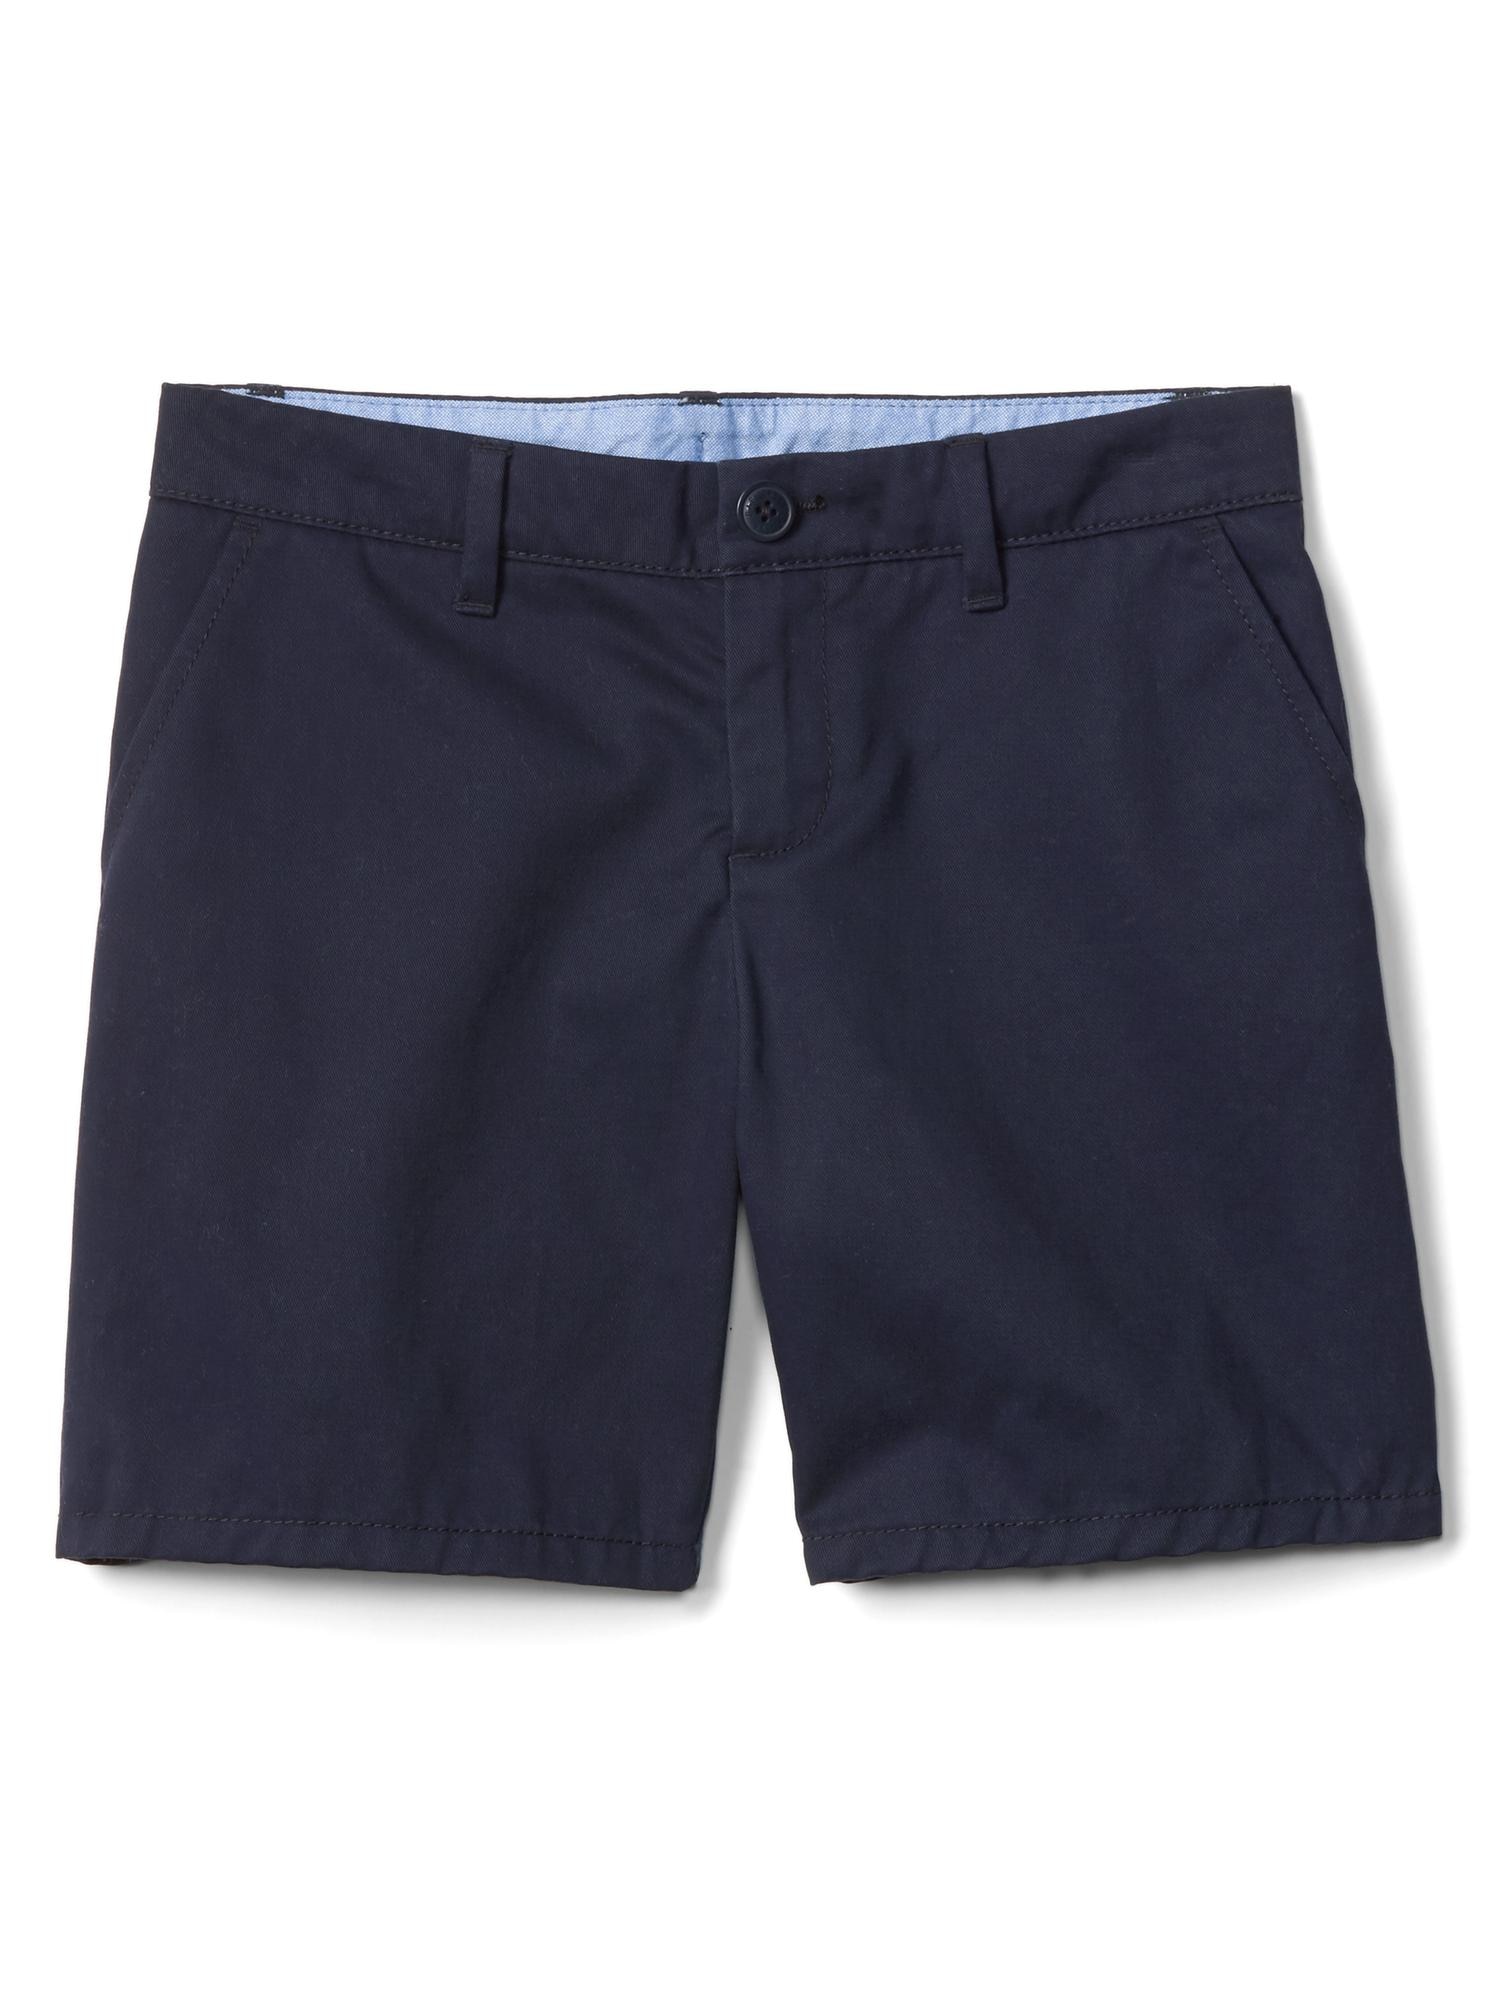 GapShield flat front shorts | Gap